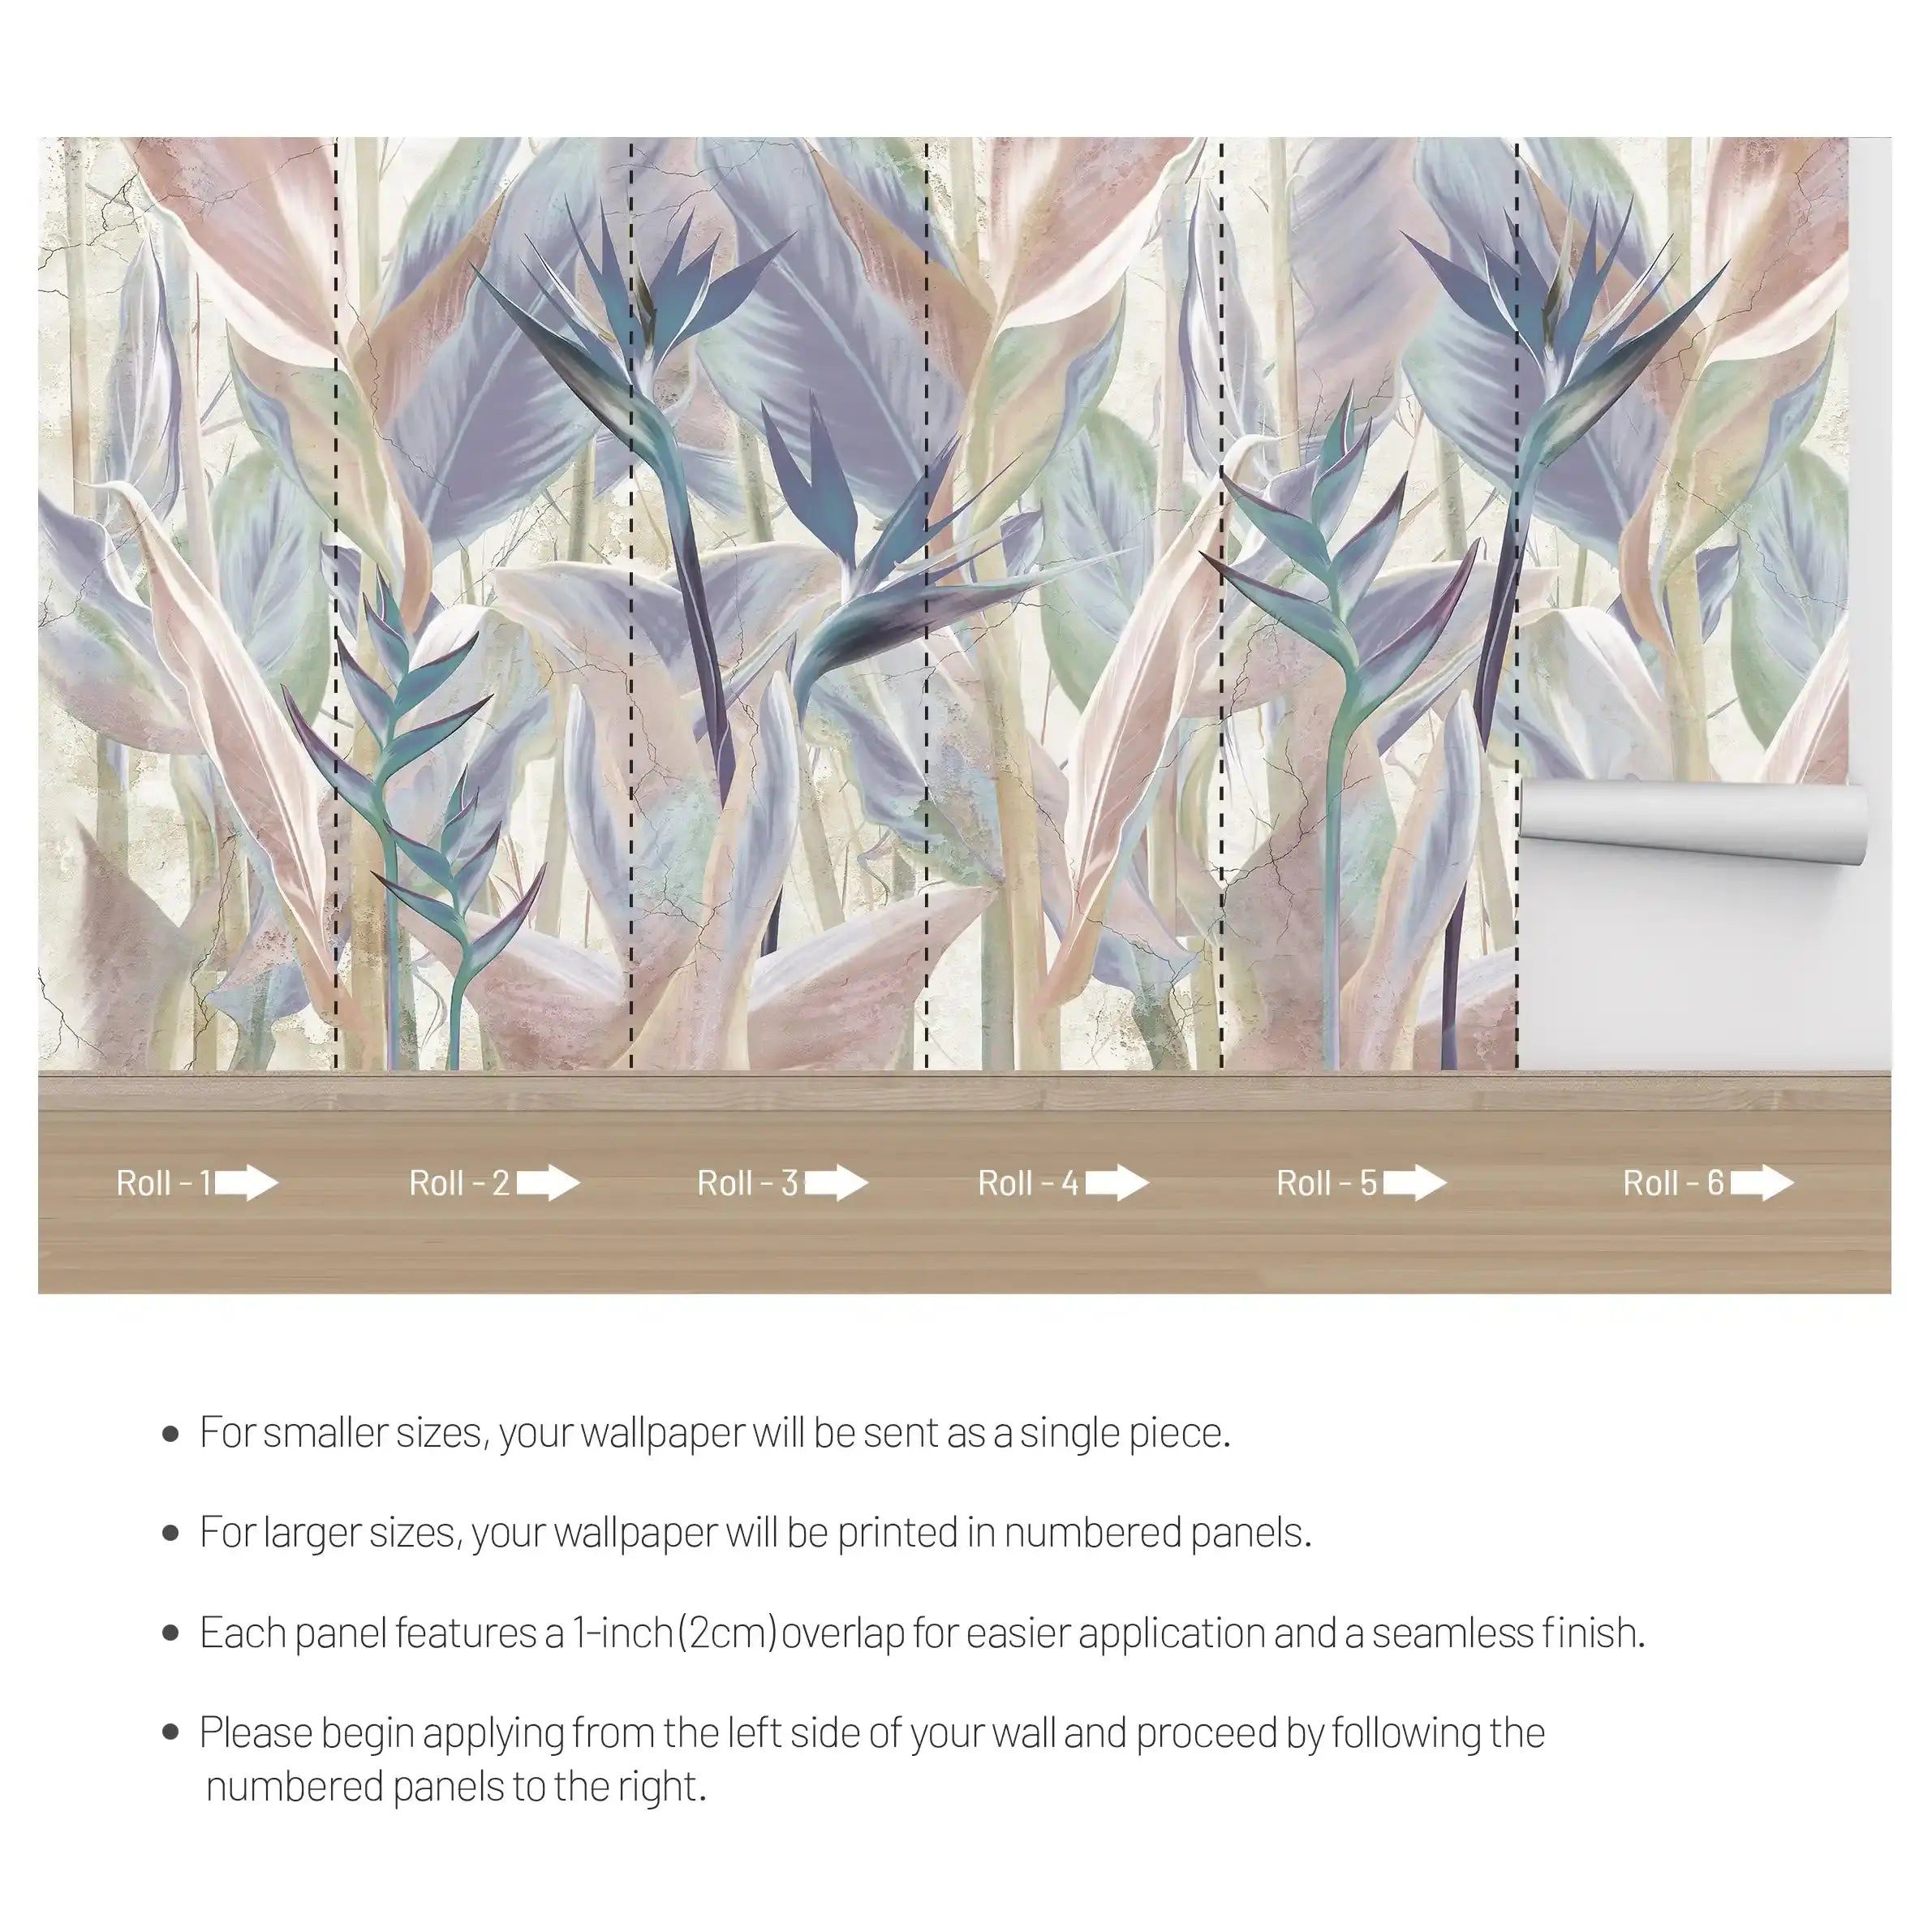 3006-B / Peel and Stick Botanical Wallpaper - Bird of Paradise Design, Easy Install Wall Mural - Artevella